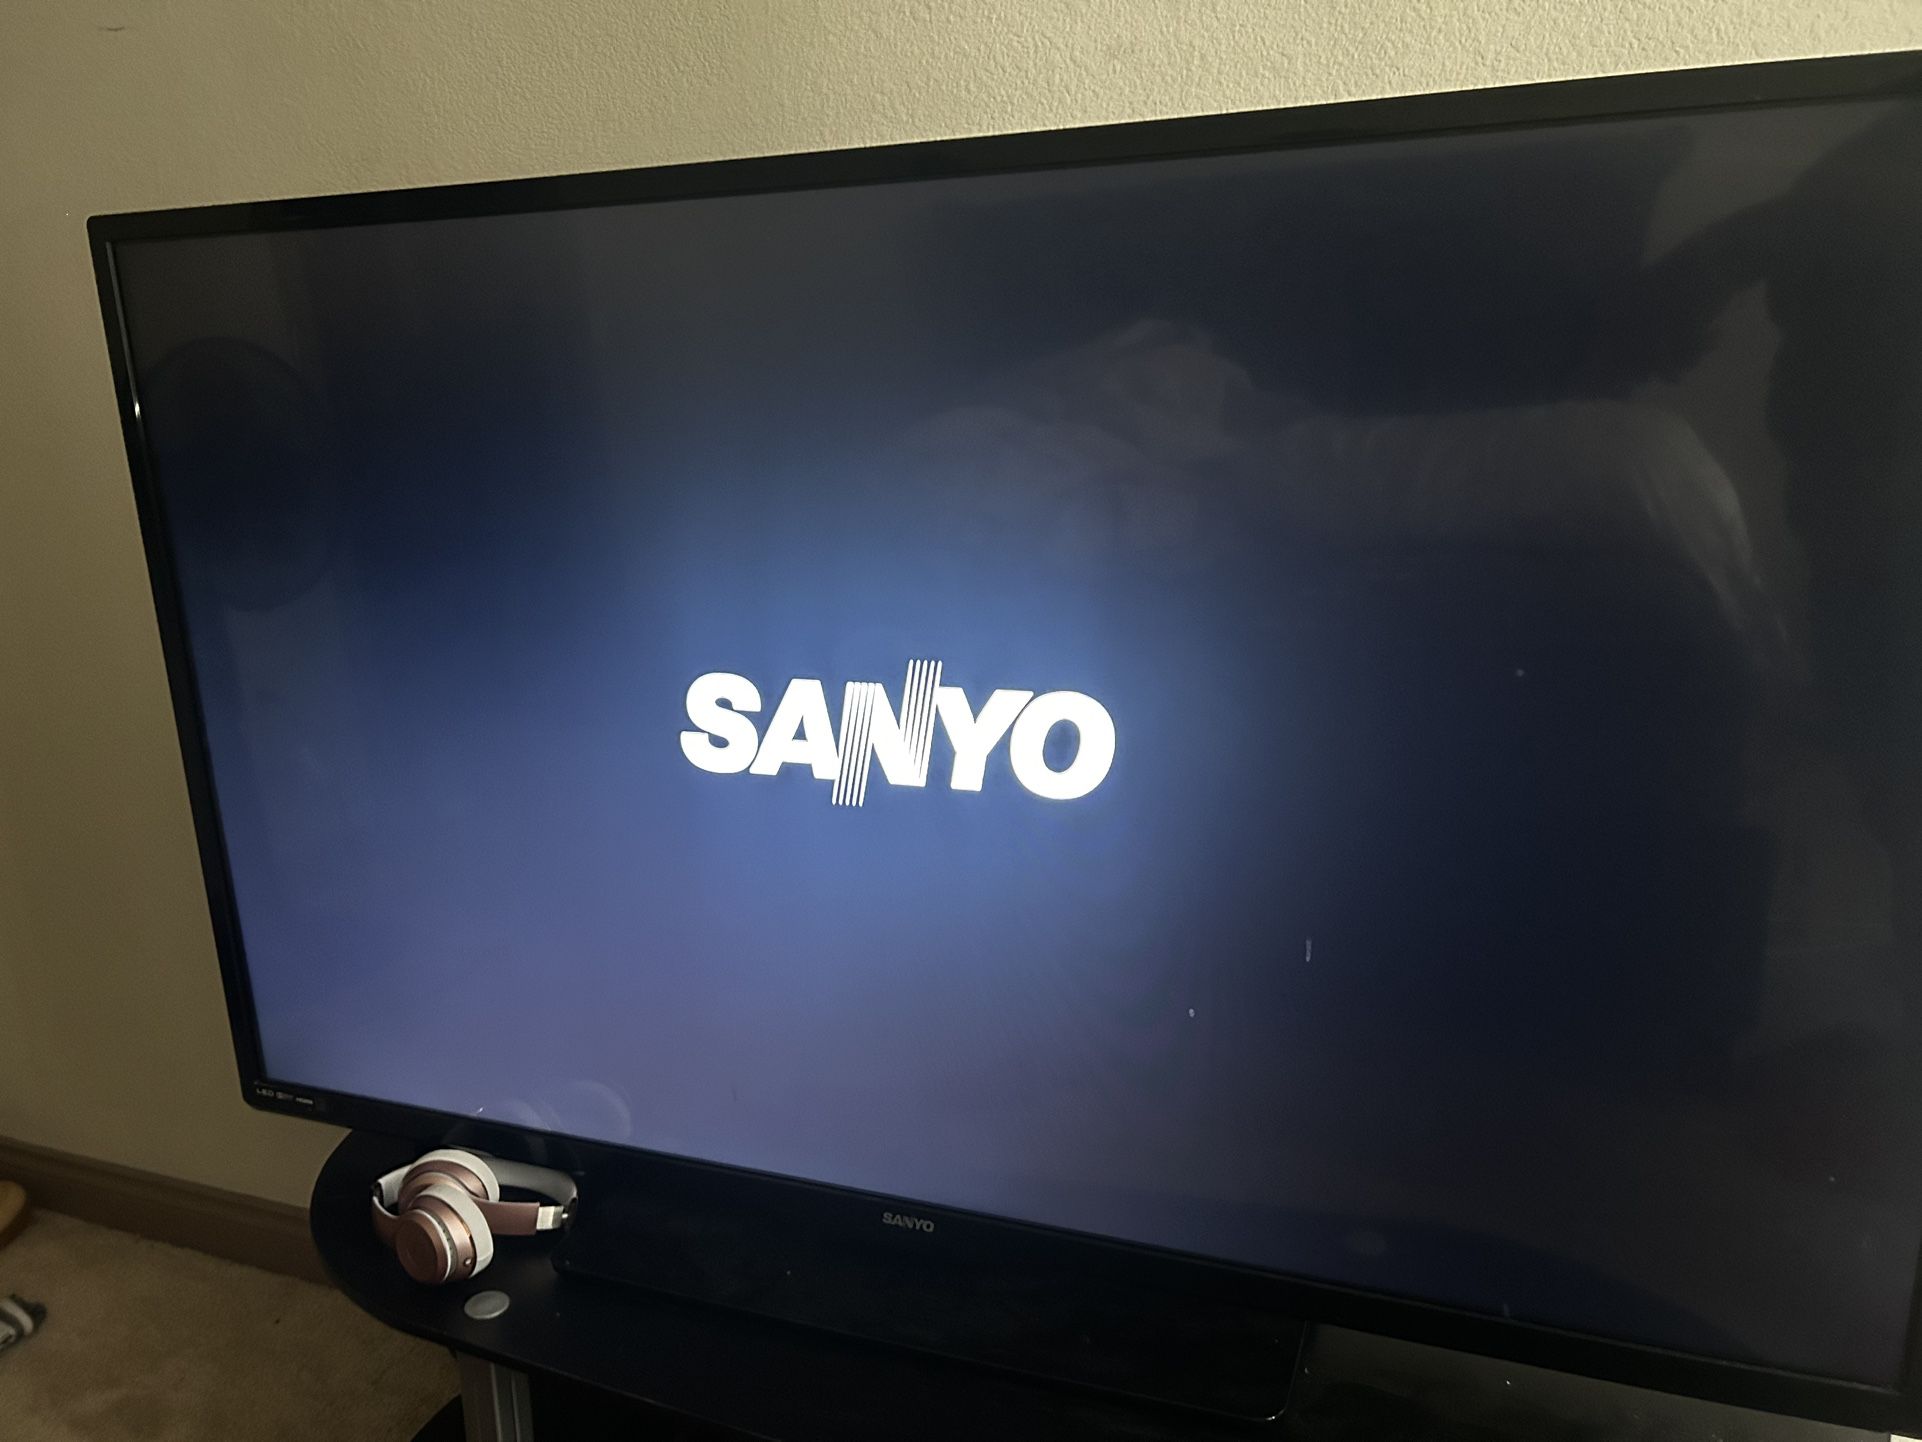 SANYO TV